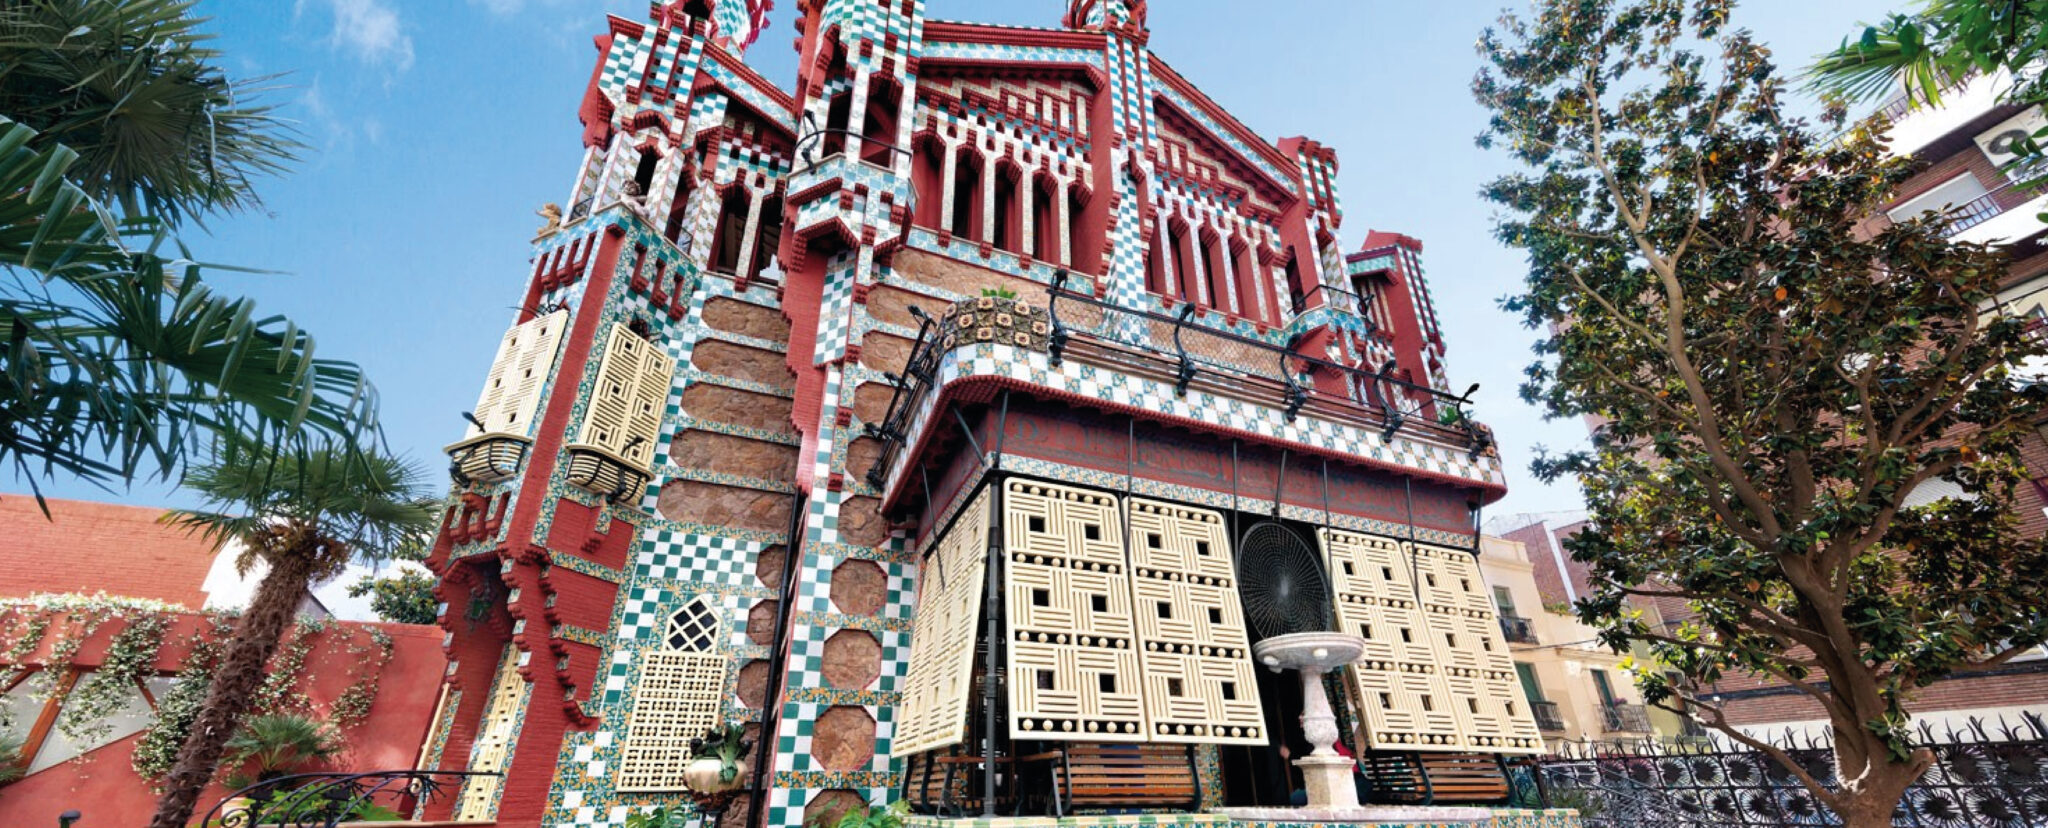 Casa Vicens Gaudí descuento Carné ISIC